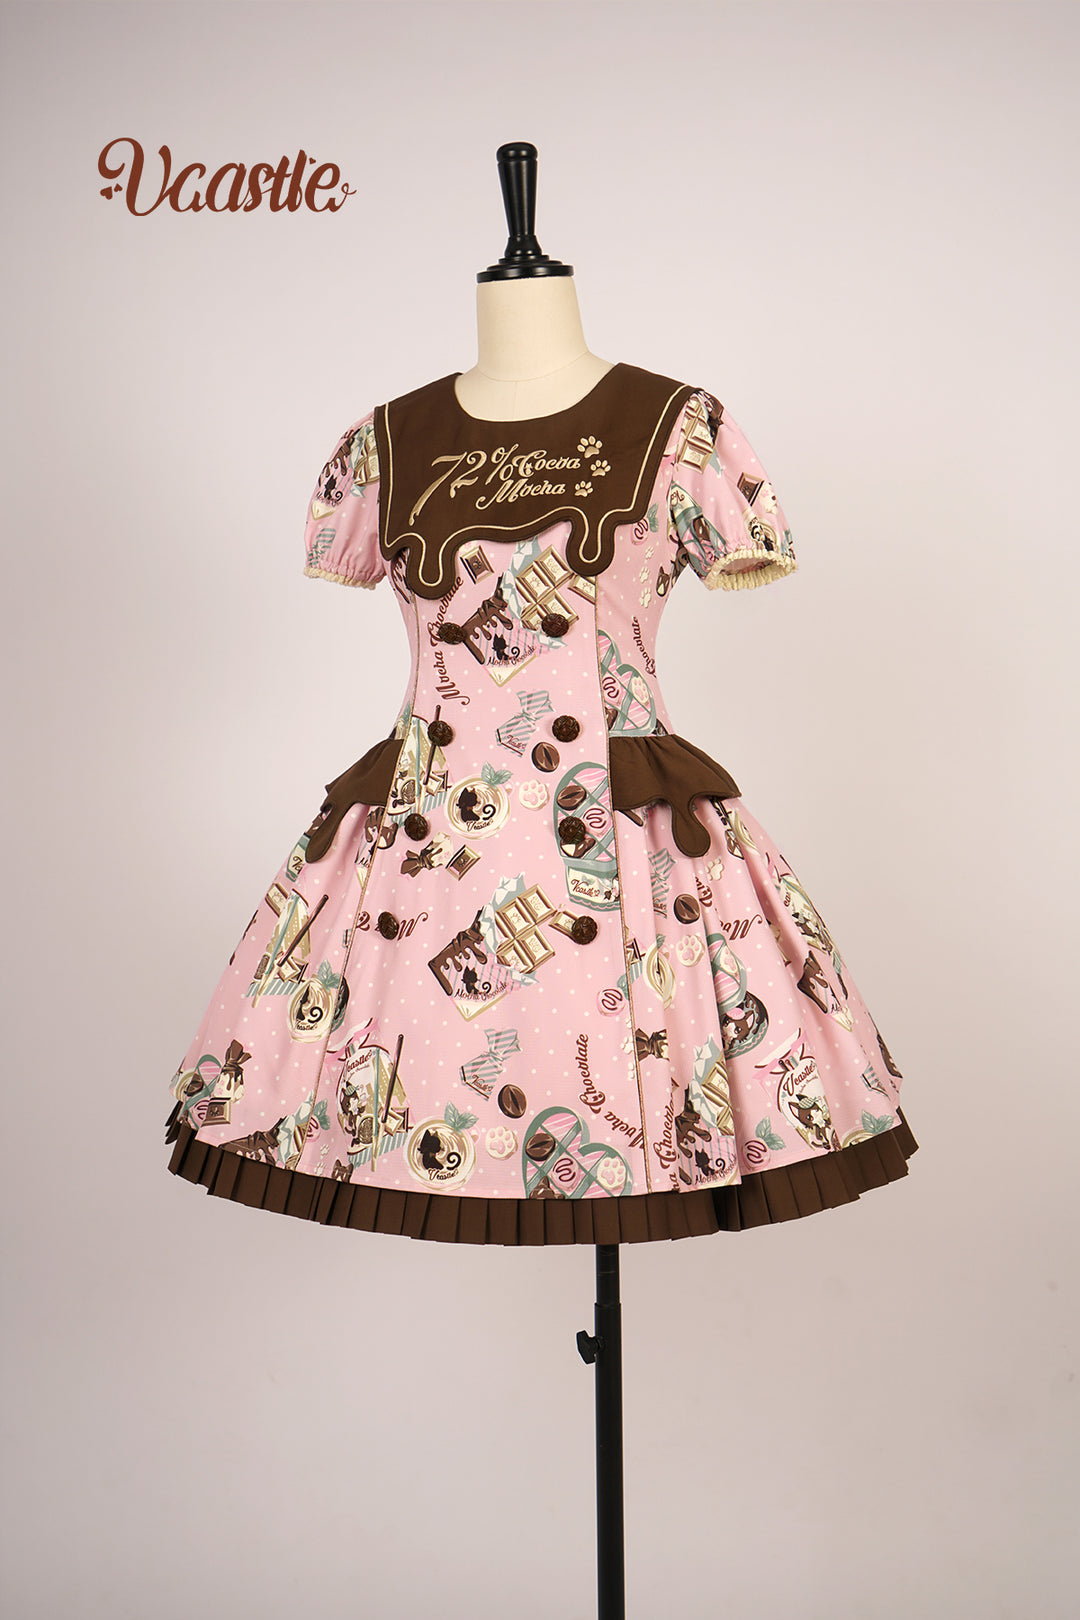 Vcastle~Mocha Choc~Kawaii Lolita Slopette Dress Suit Multicolors S pink OP 